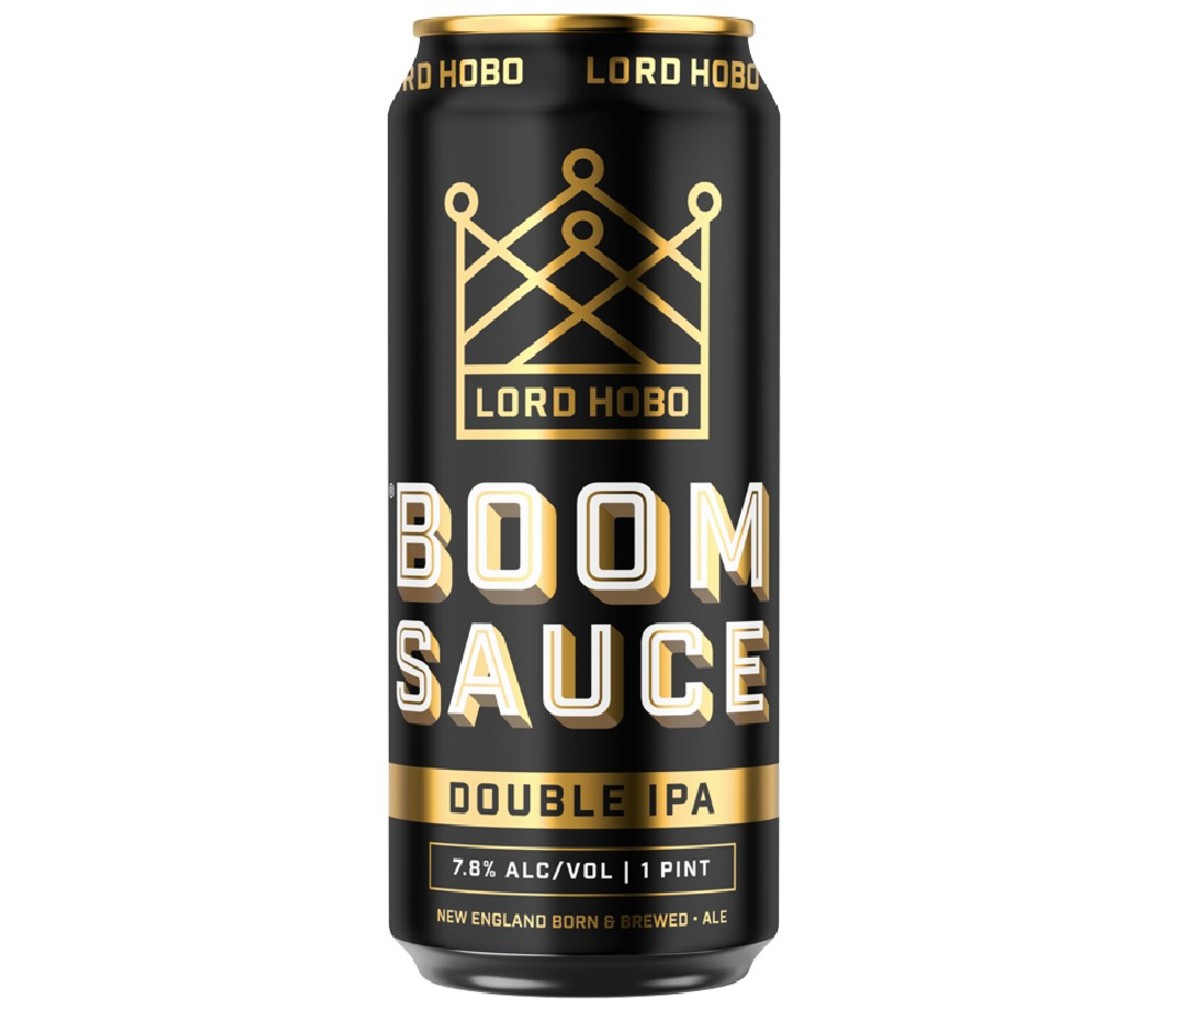 Can of Lord Hobo Boom Sauce double IPA beer